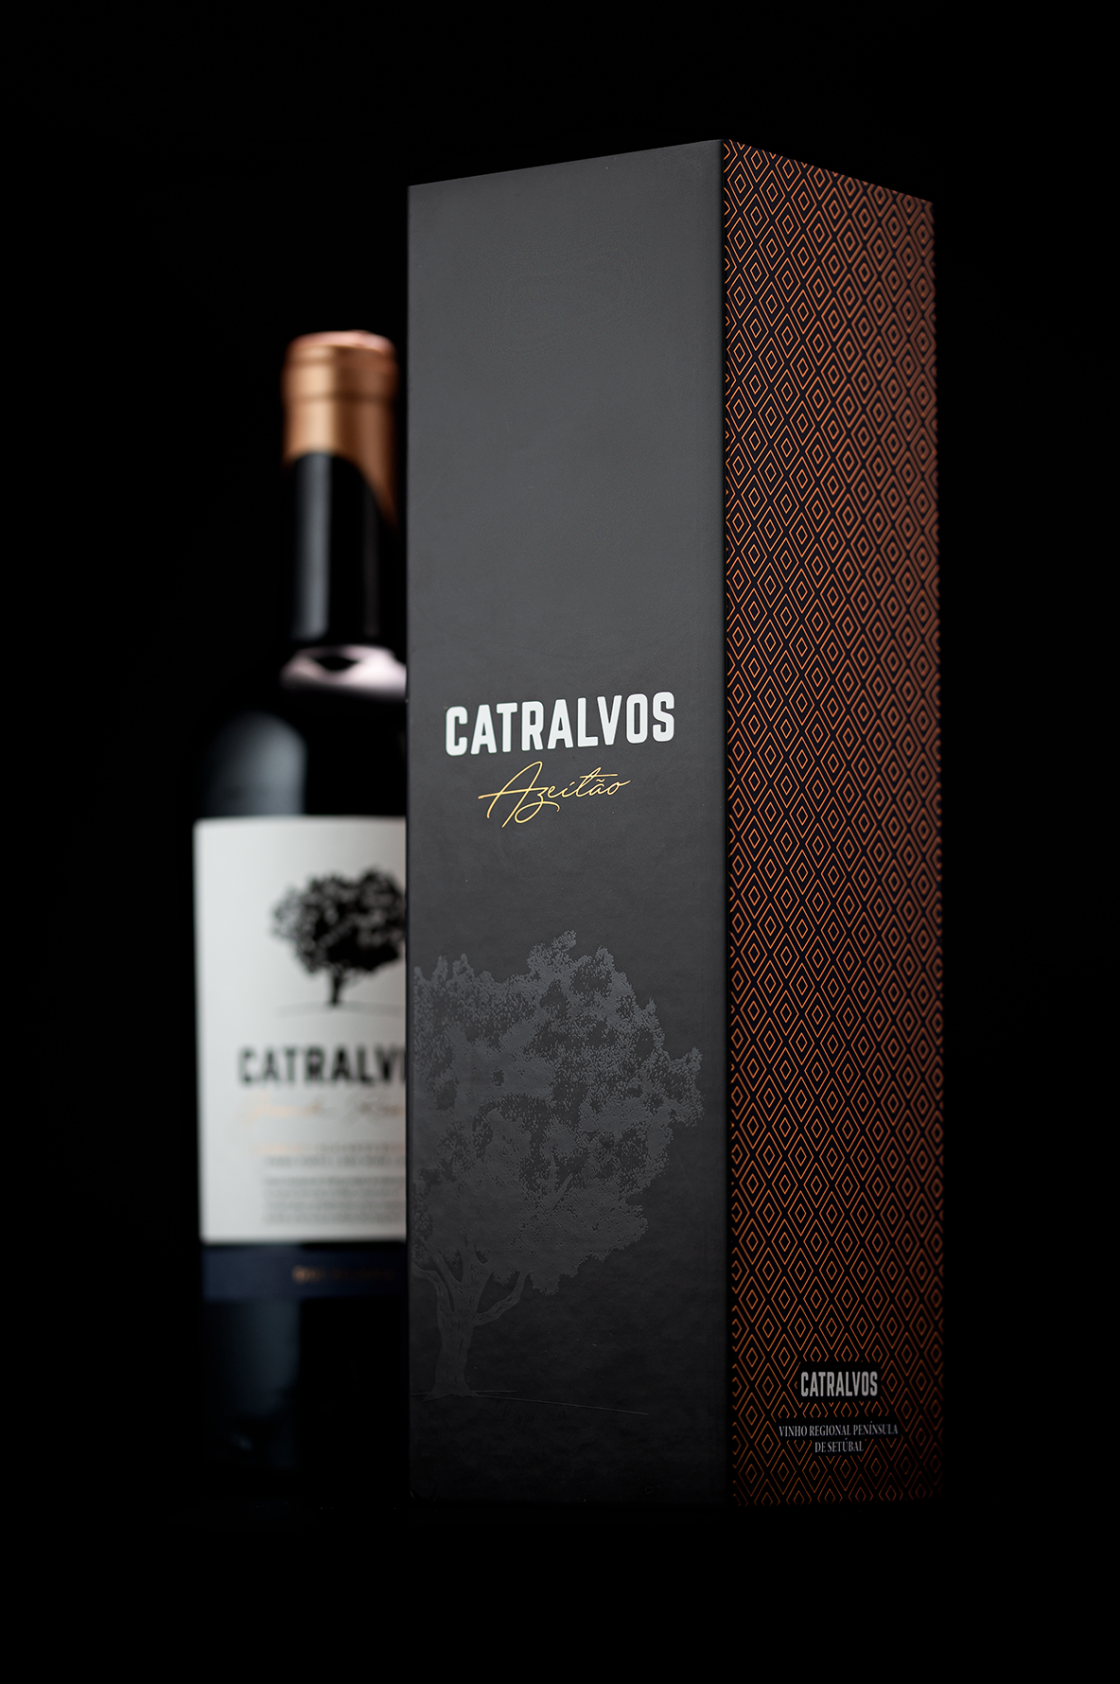 packaging design – Catralvos